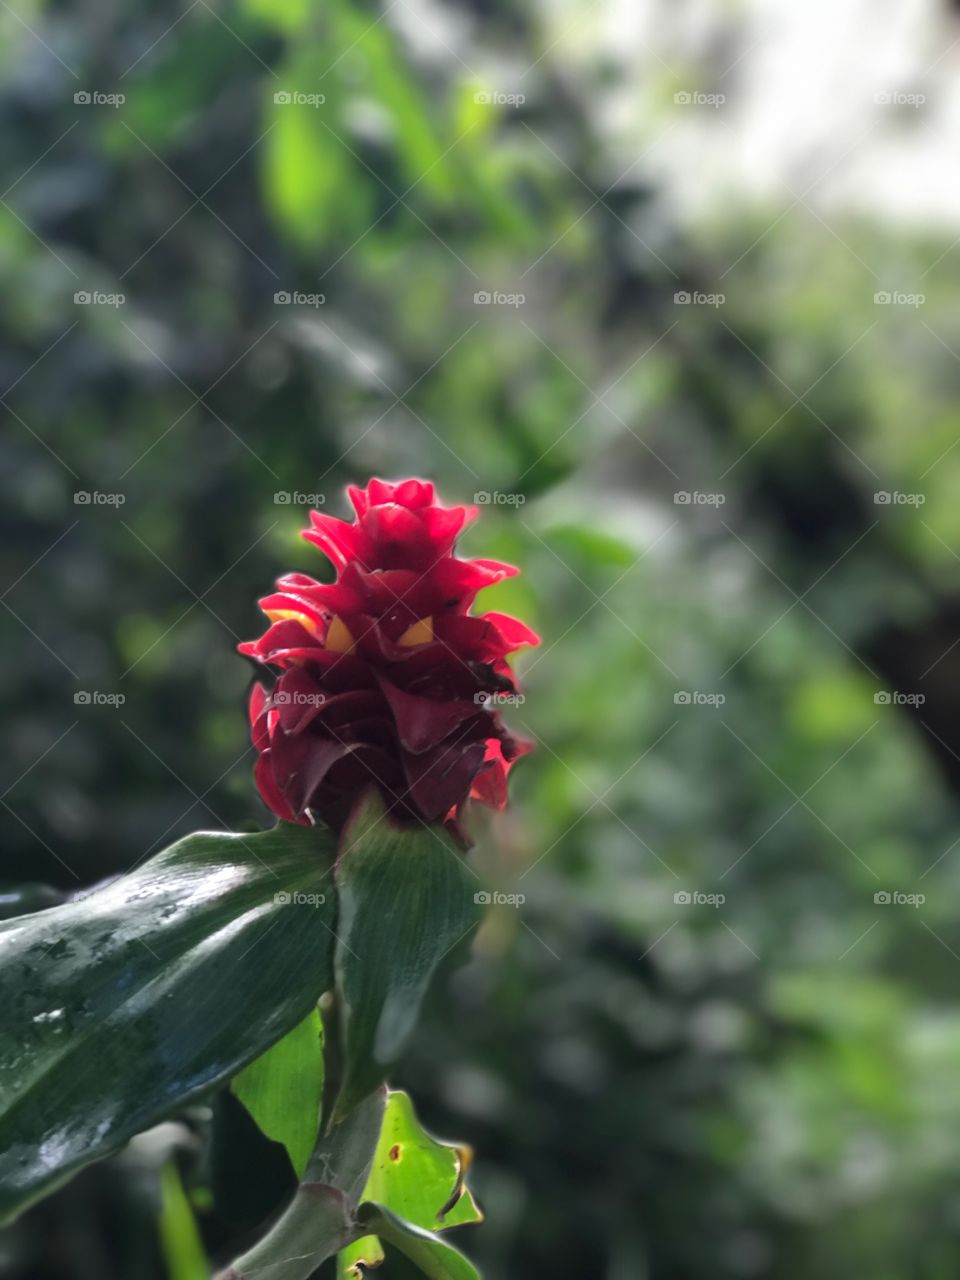 Maui Flower